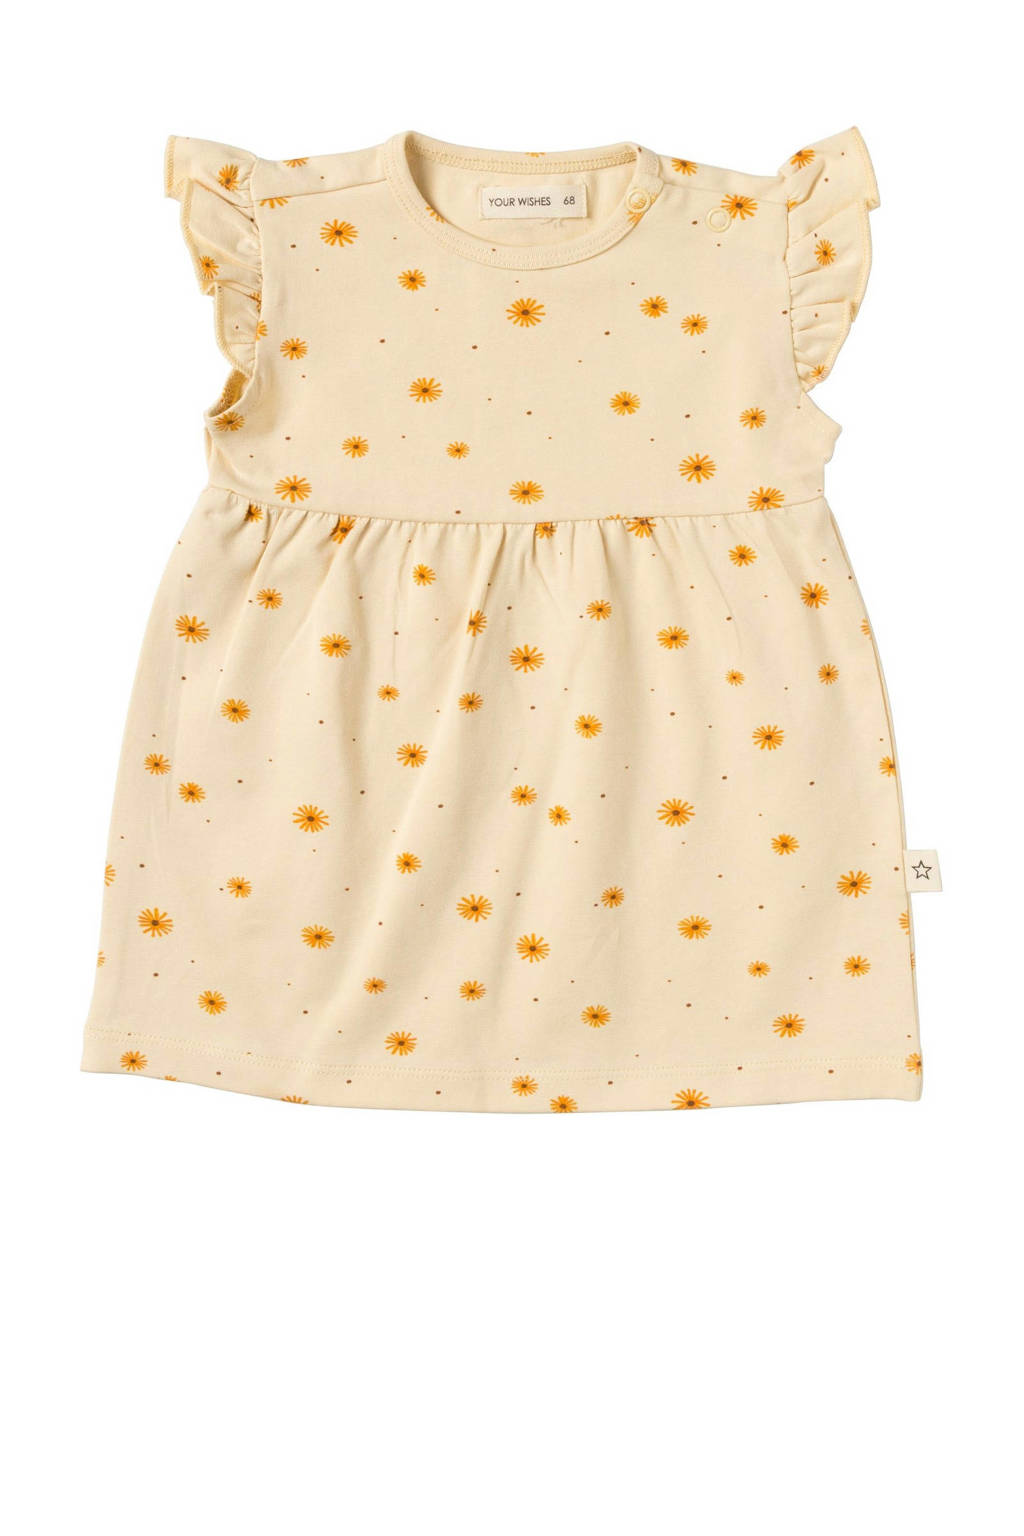 gebloemde baby jurk Pleun ecru/geel